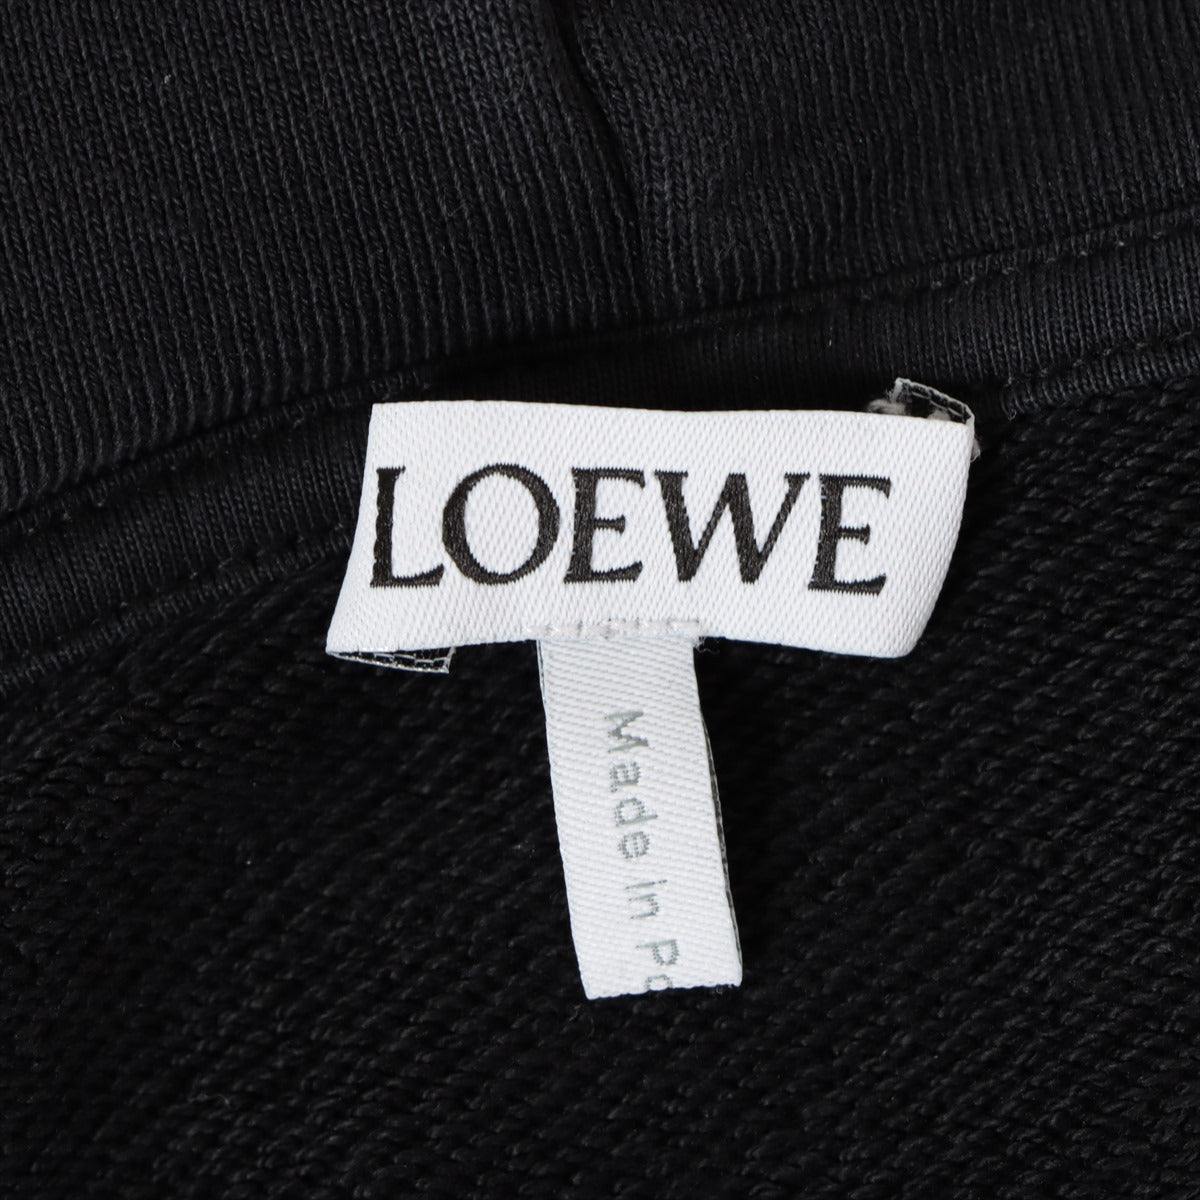 LOEWE アナグラム パッチポケットロゴ ホワイト パーカー Sサイズ 新品